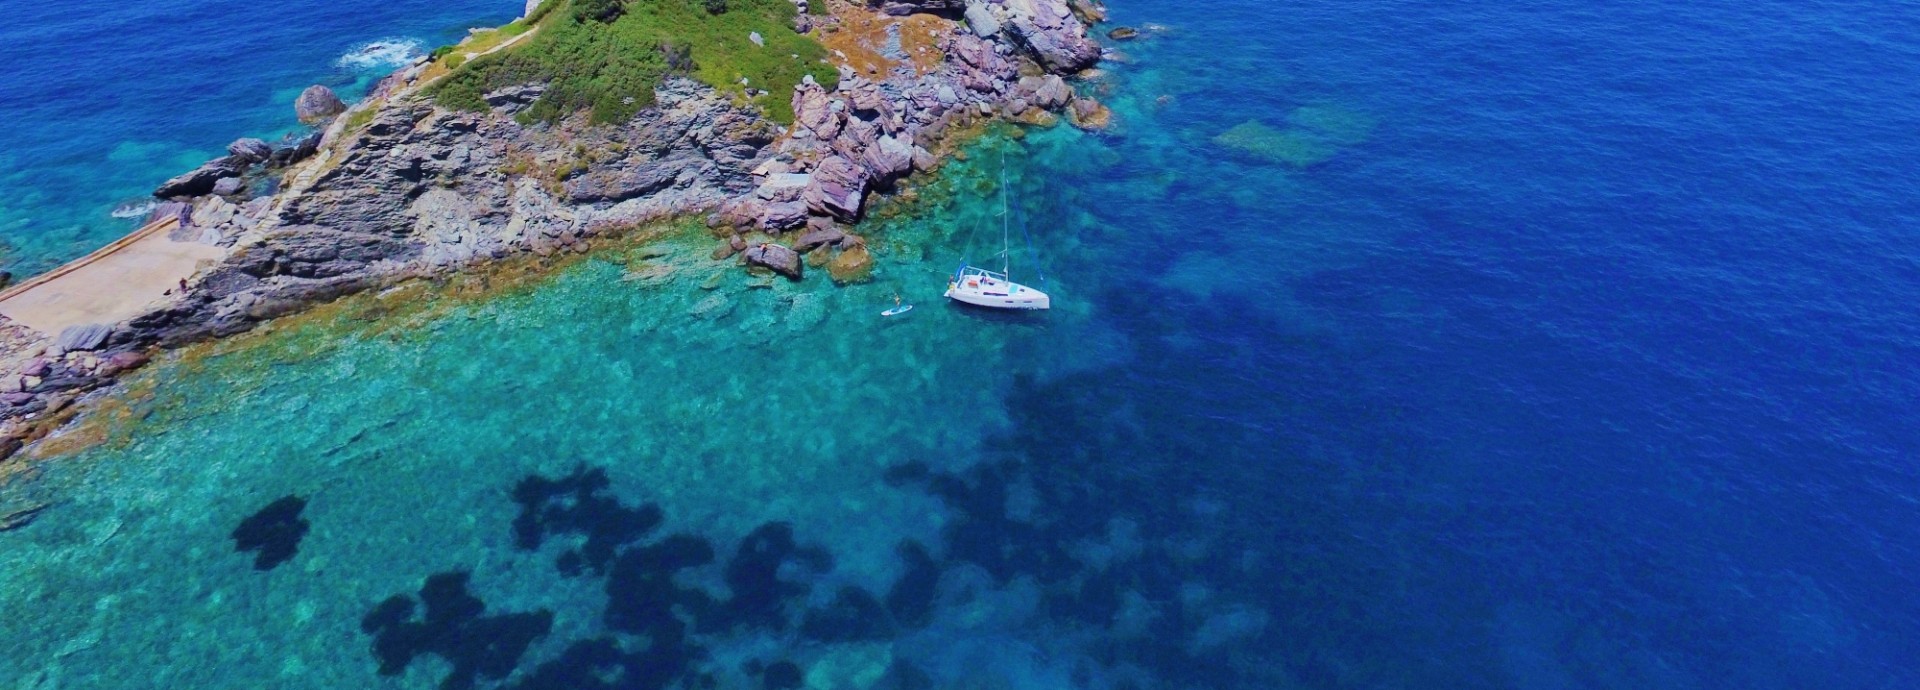 Anchored below the Mamma Mia church on Skopelos Island